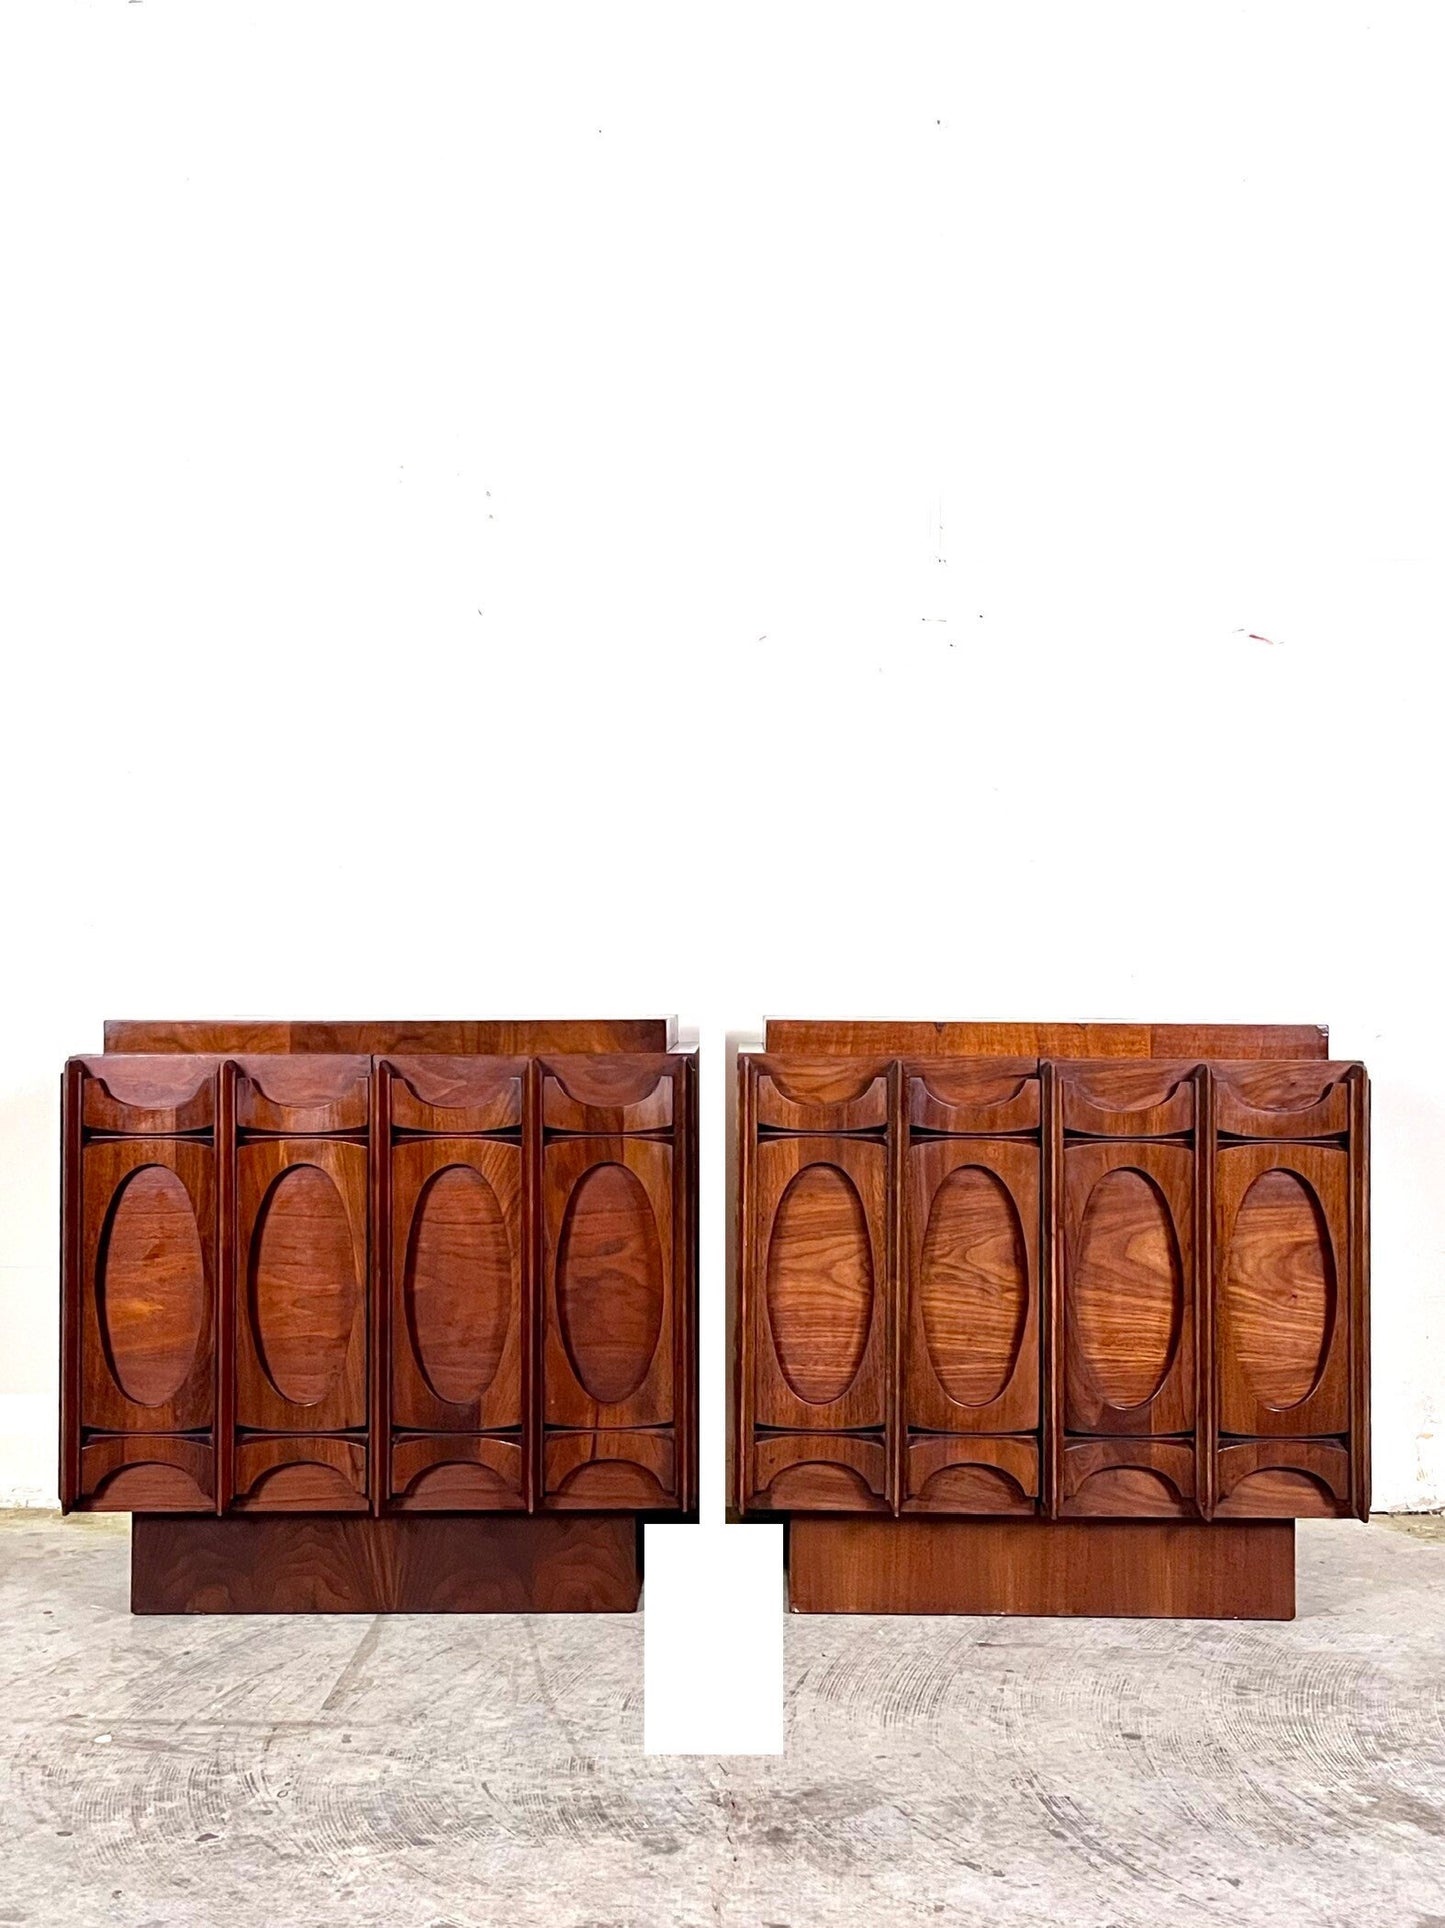 Tobago Furniture Pair of Mid Century Modern Brutalist Nightstands c. 1970s